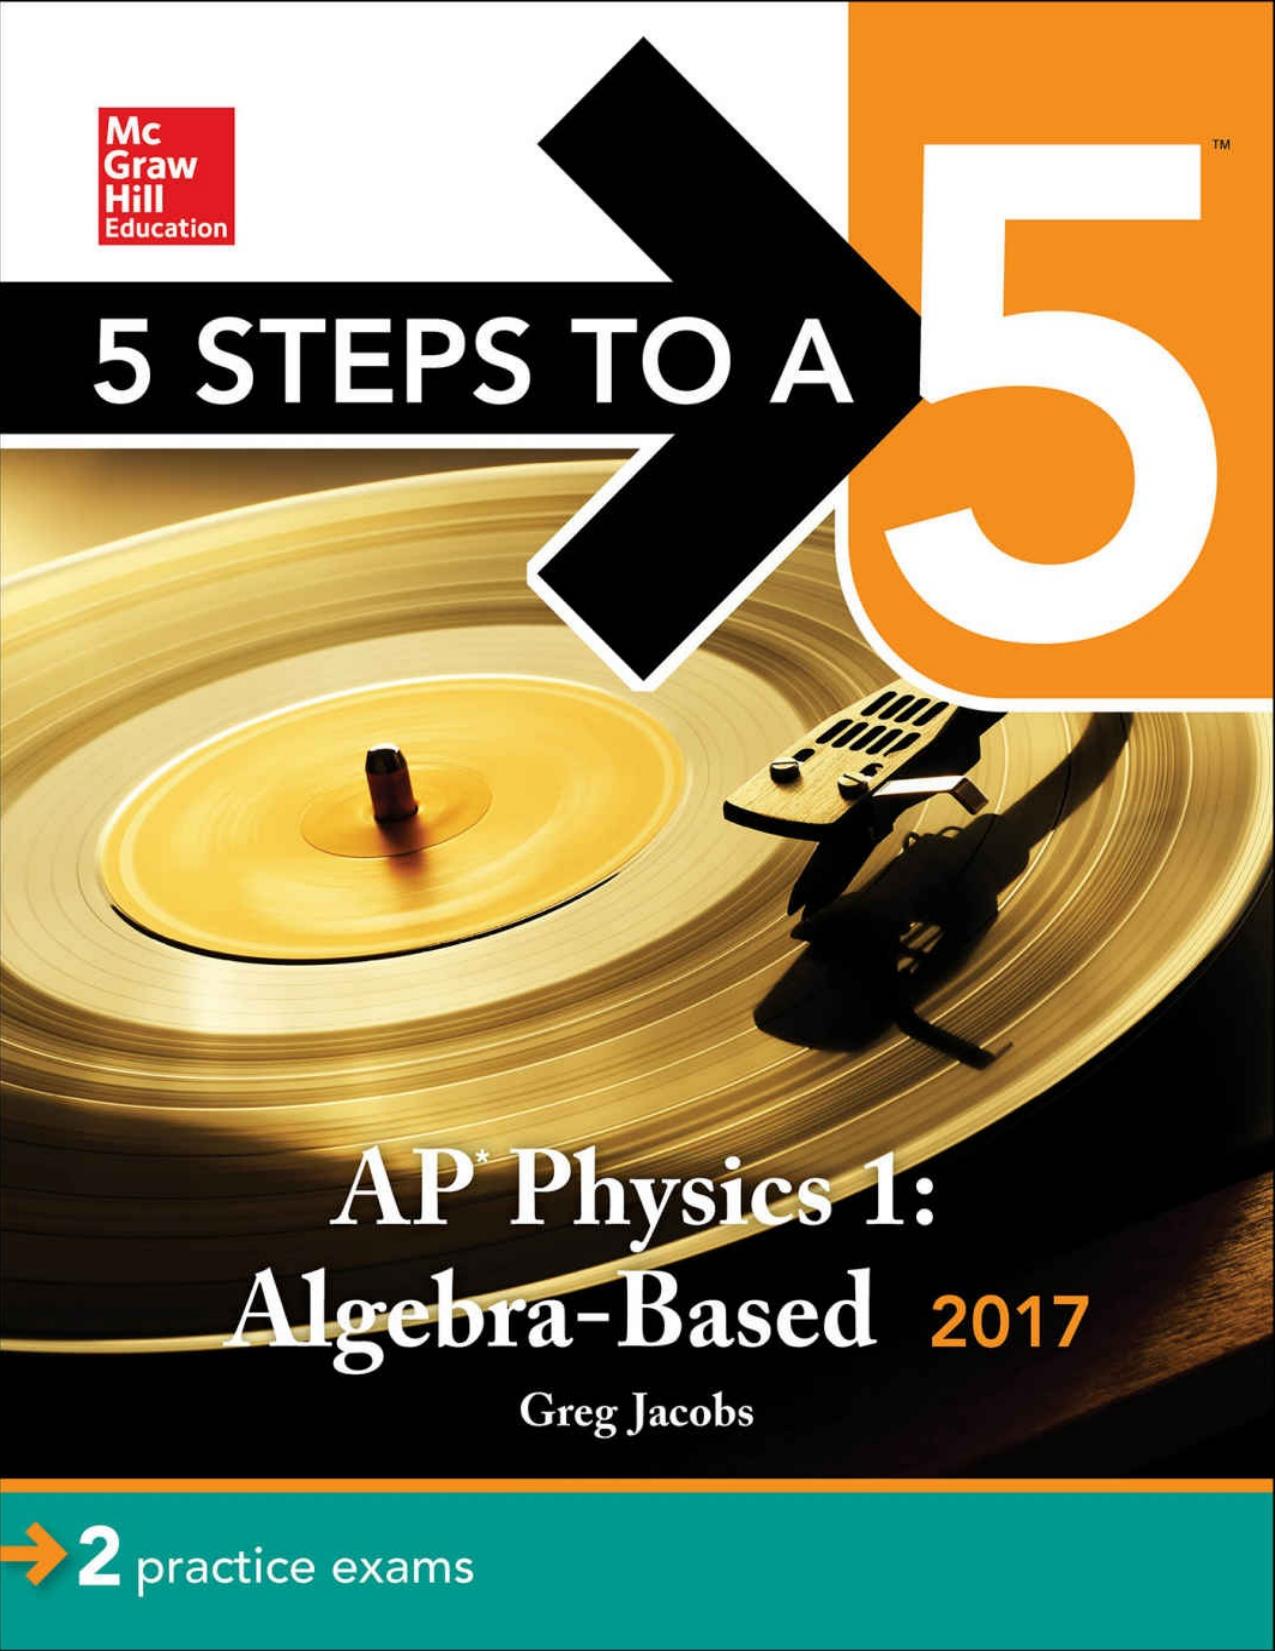 5 Steps to a 5 AP Physics 1 Algebra-Based 2017.jpg